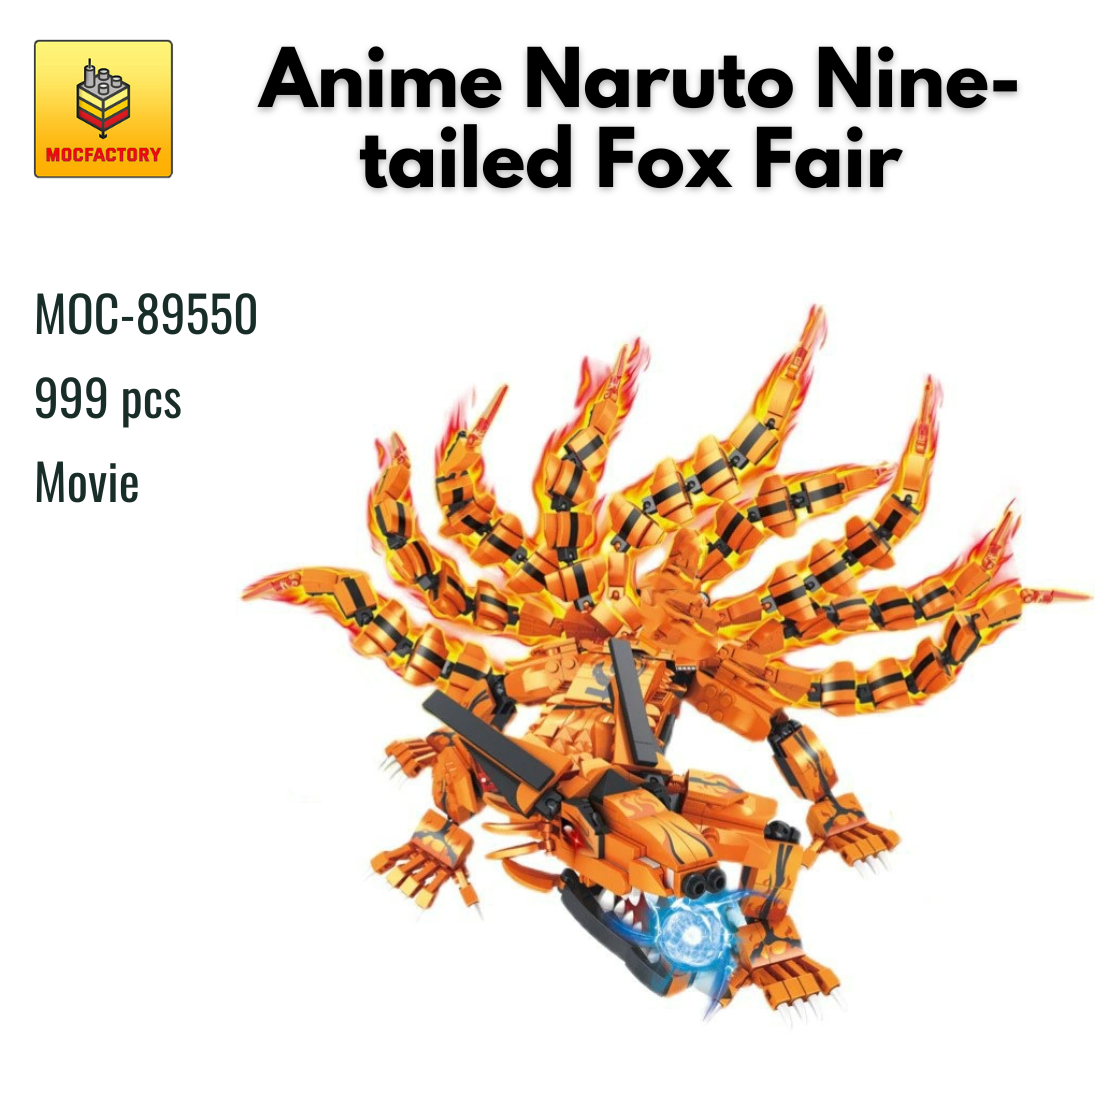 MOC-89550 Anime Naruto Nine-tailed Fox Fair With 999 Pieces